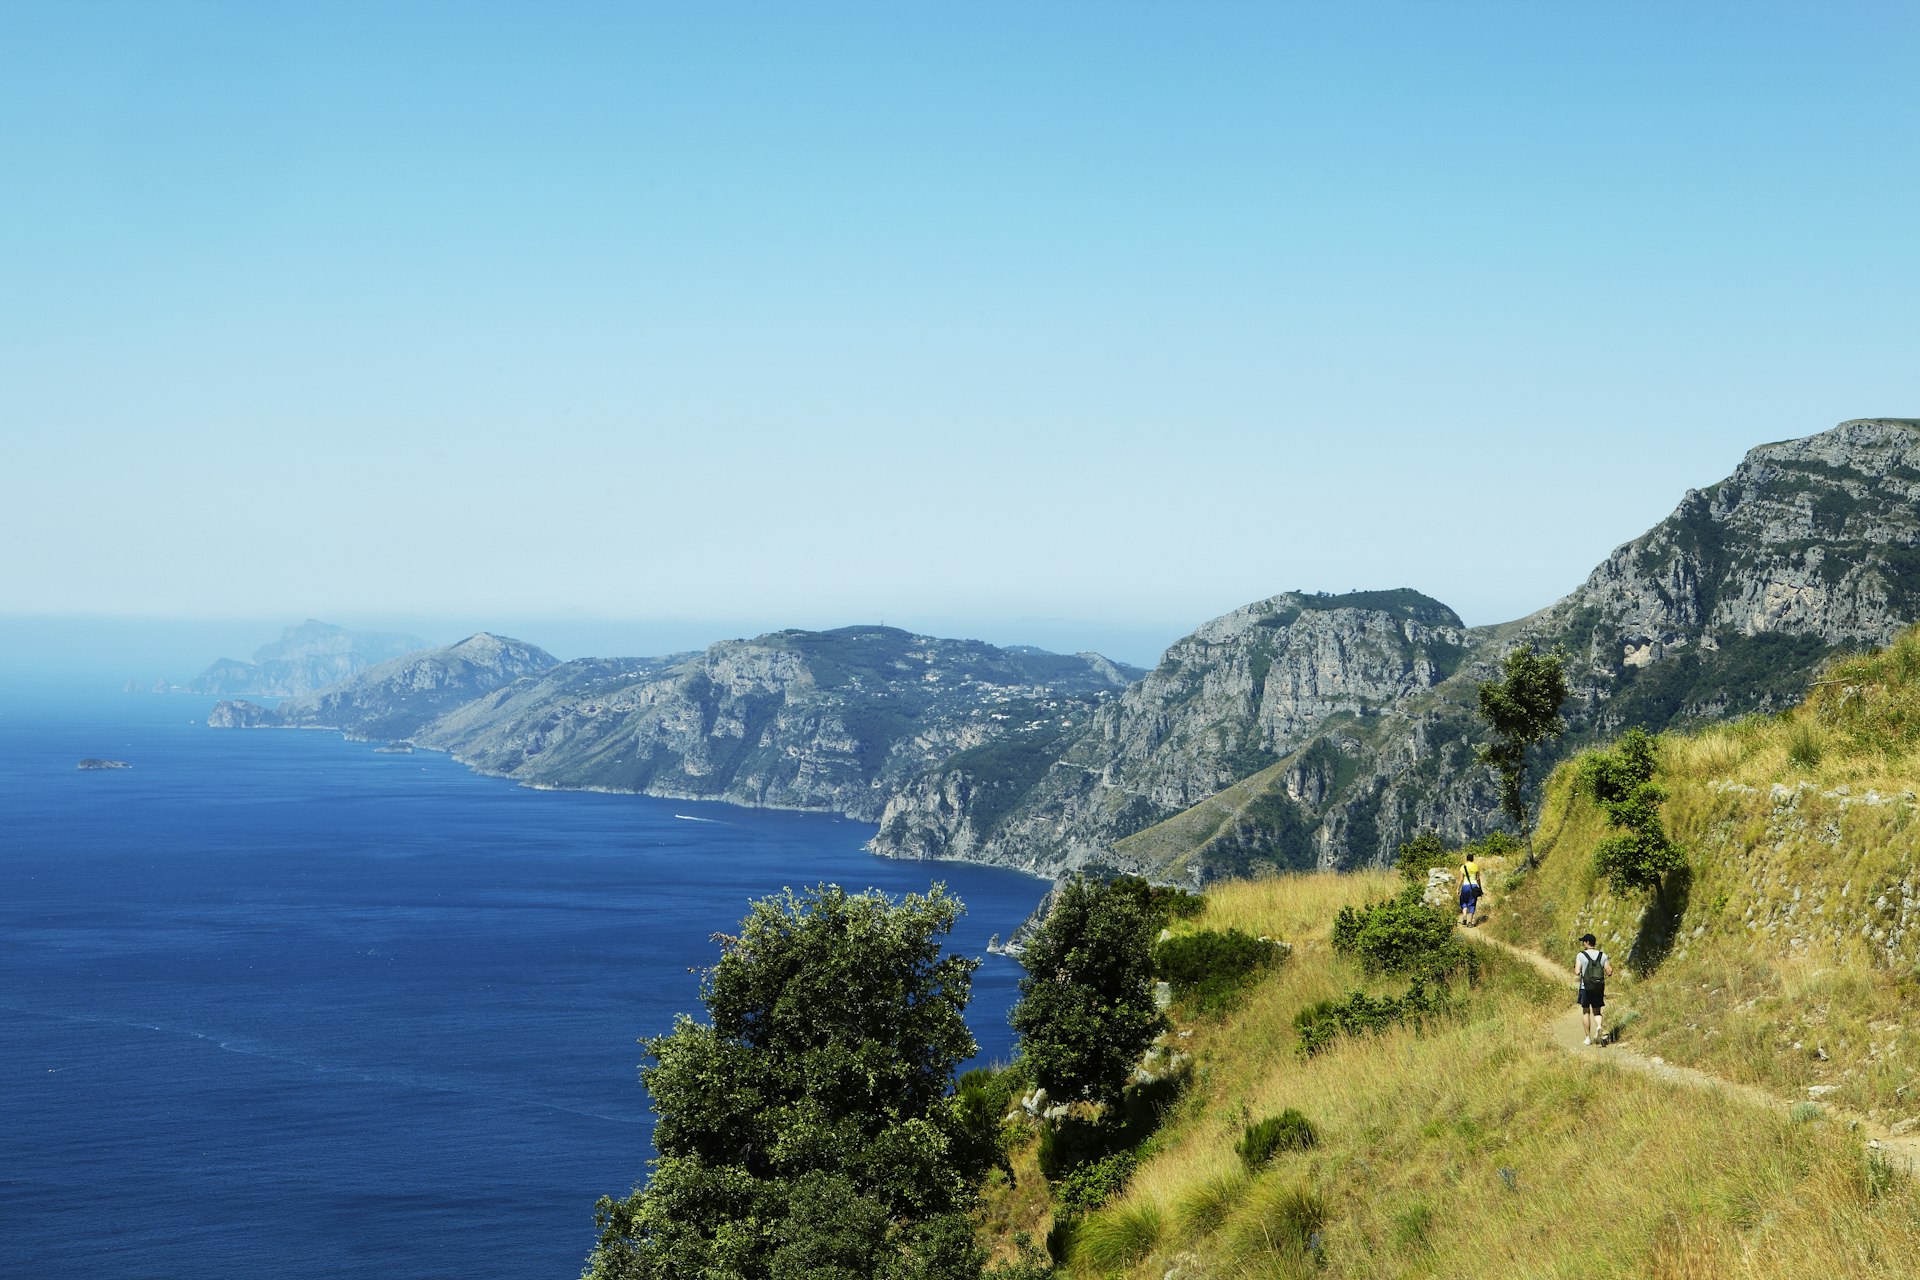 Hikers on the Sentiero Degli Dei (Path of the Gods) on the Amalfi Coast, Italy